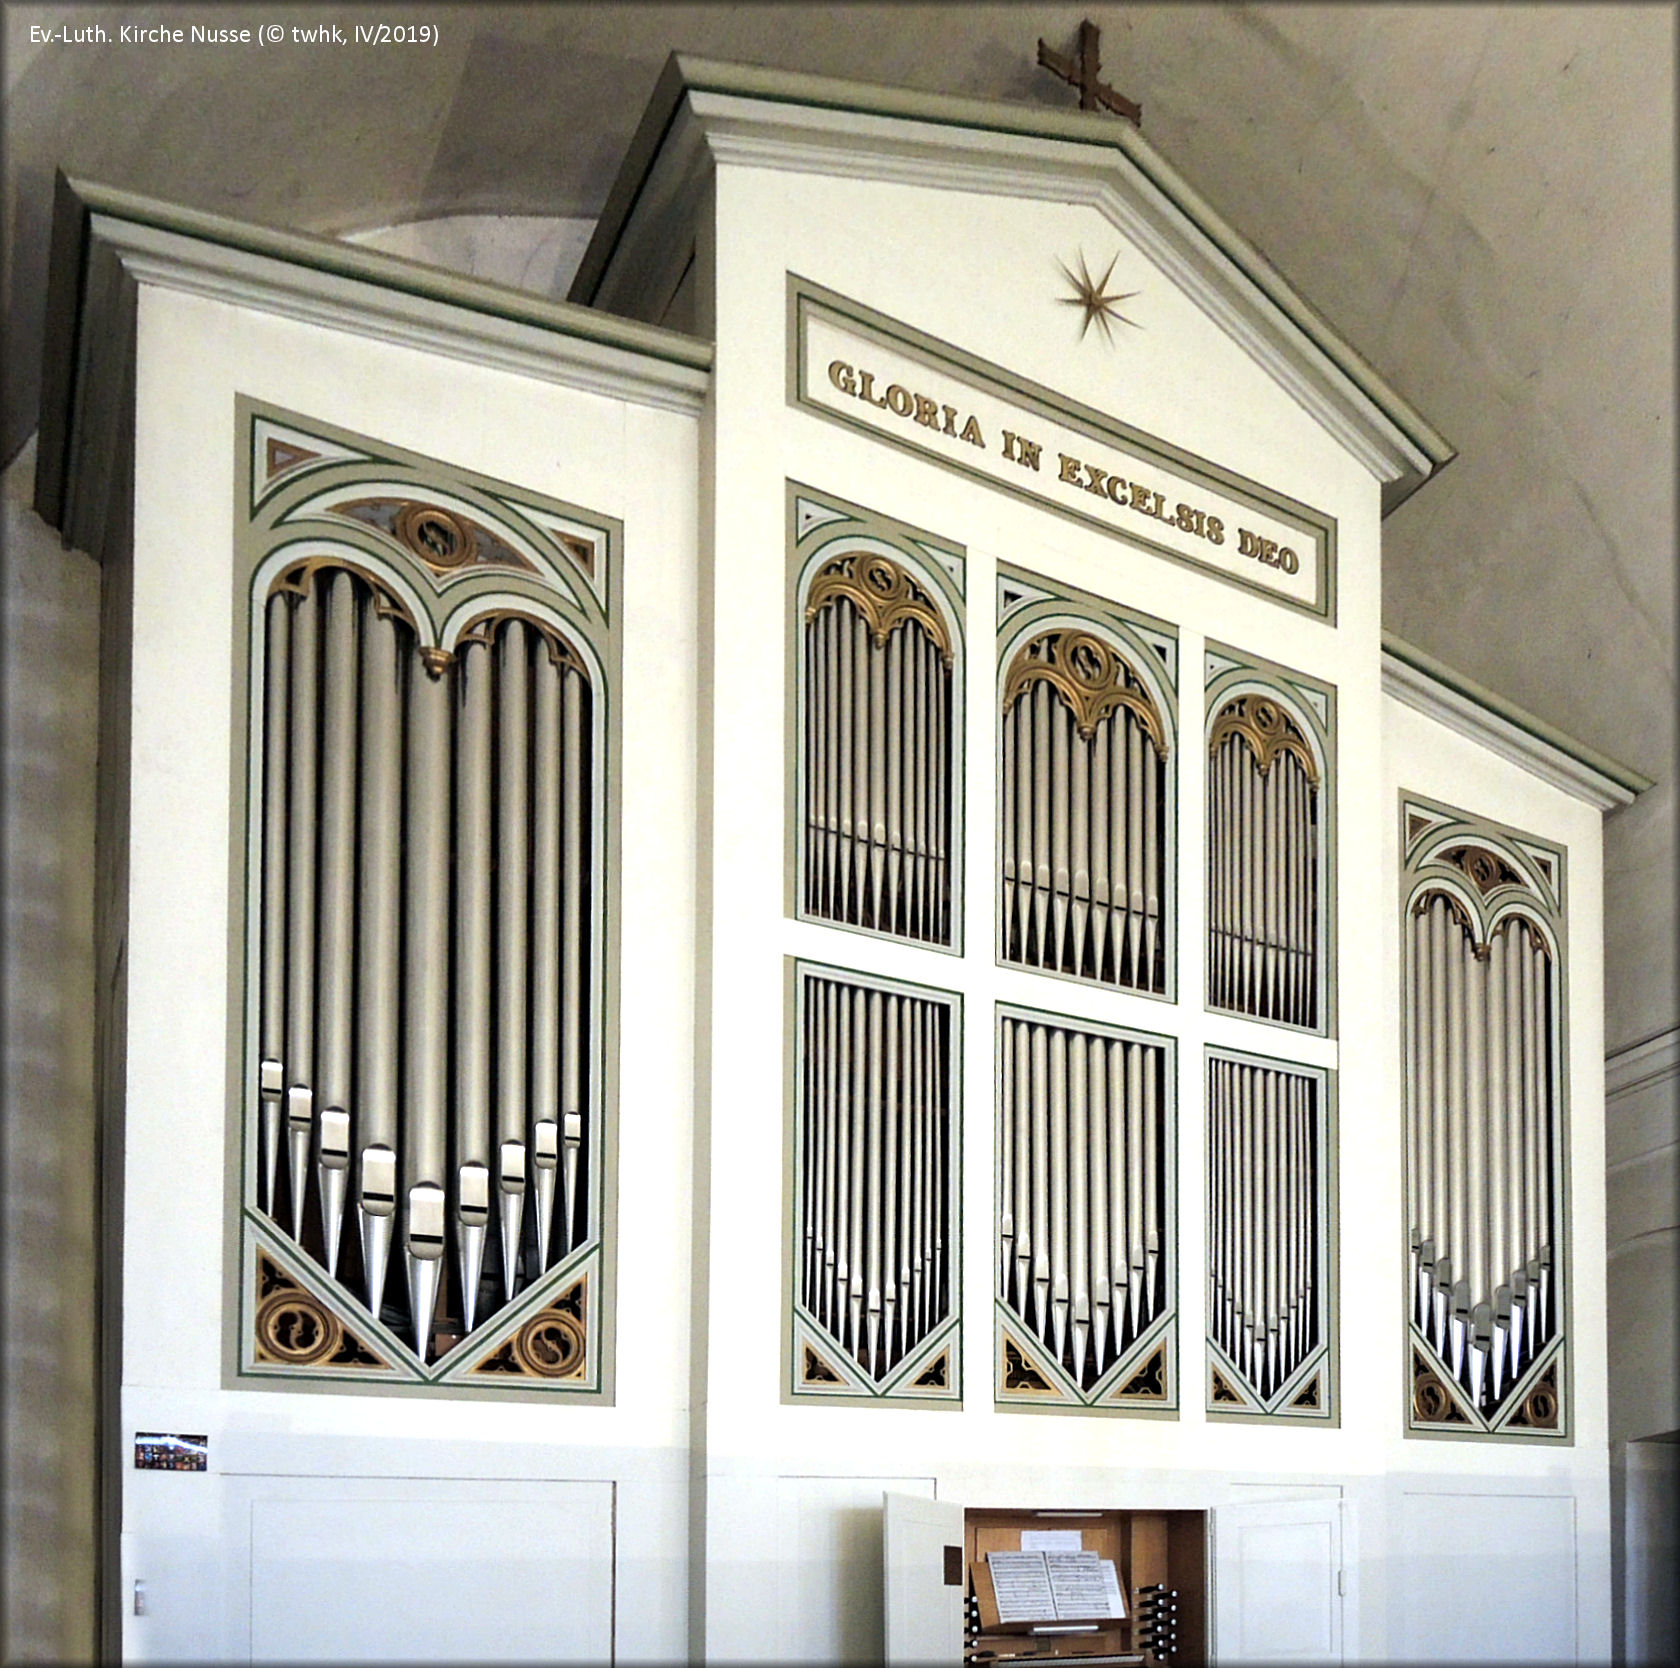 kirche nusse - 9038 - orgel.jpg